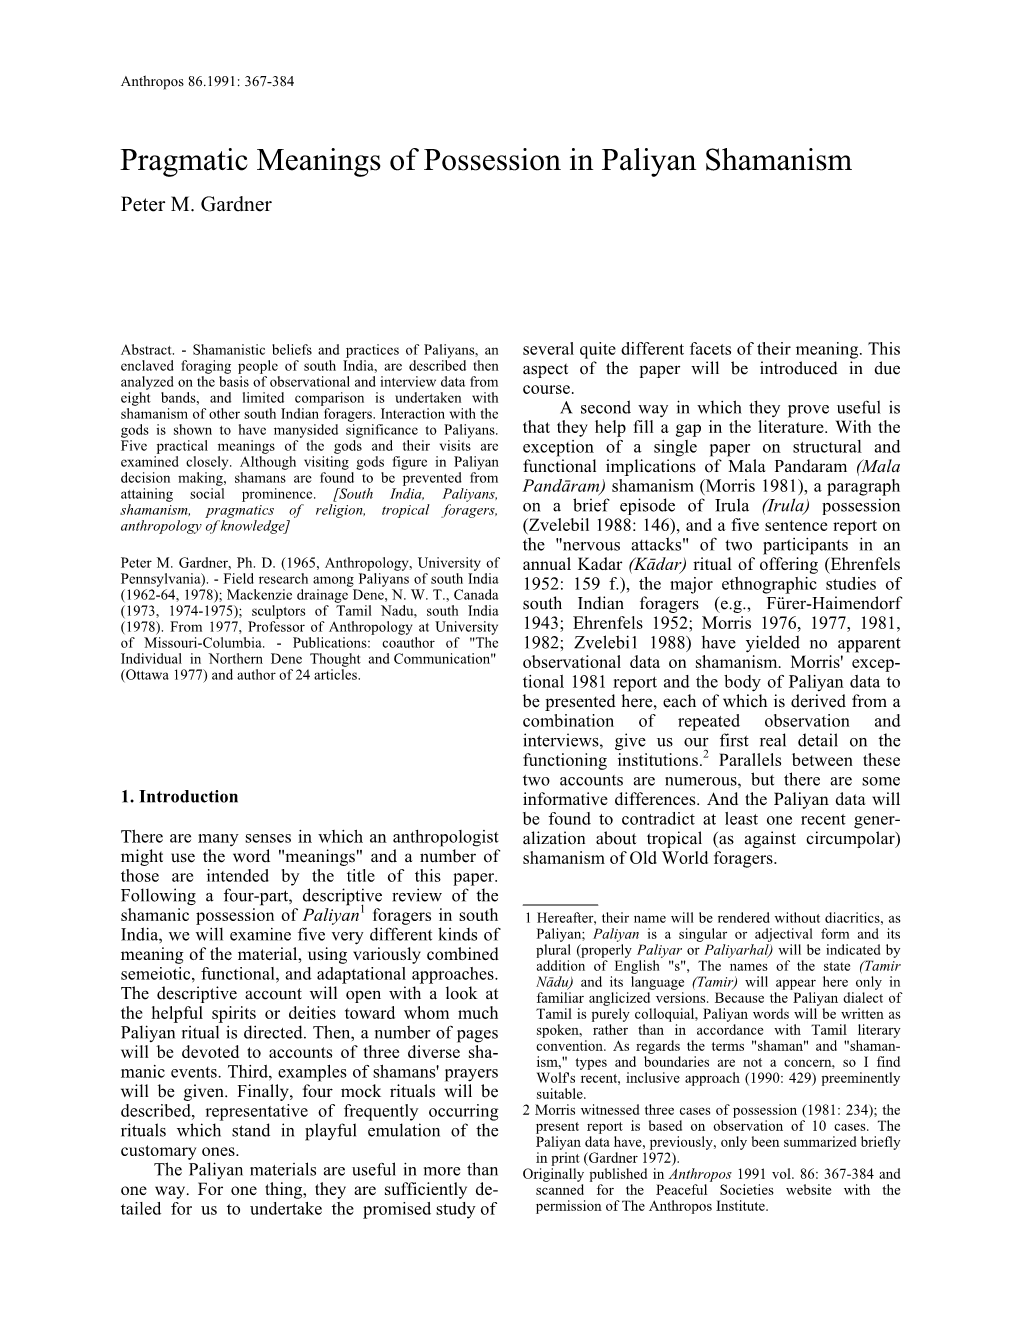 Pragmatic Meanings of Possession in Paliyan Shamanism